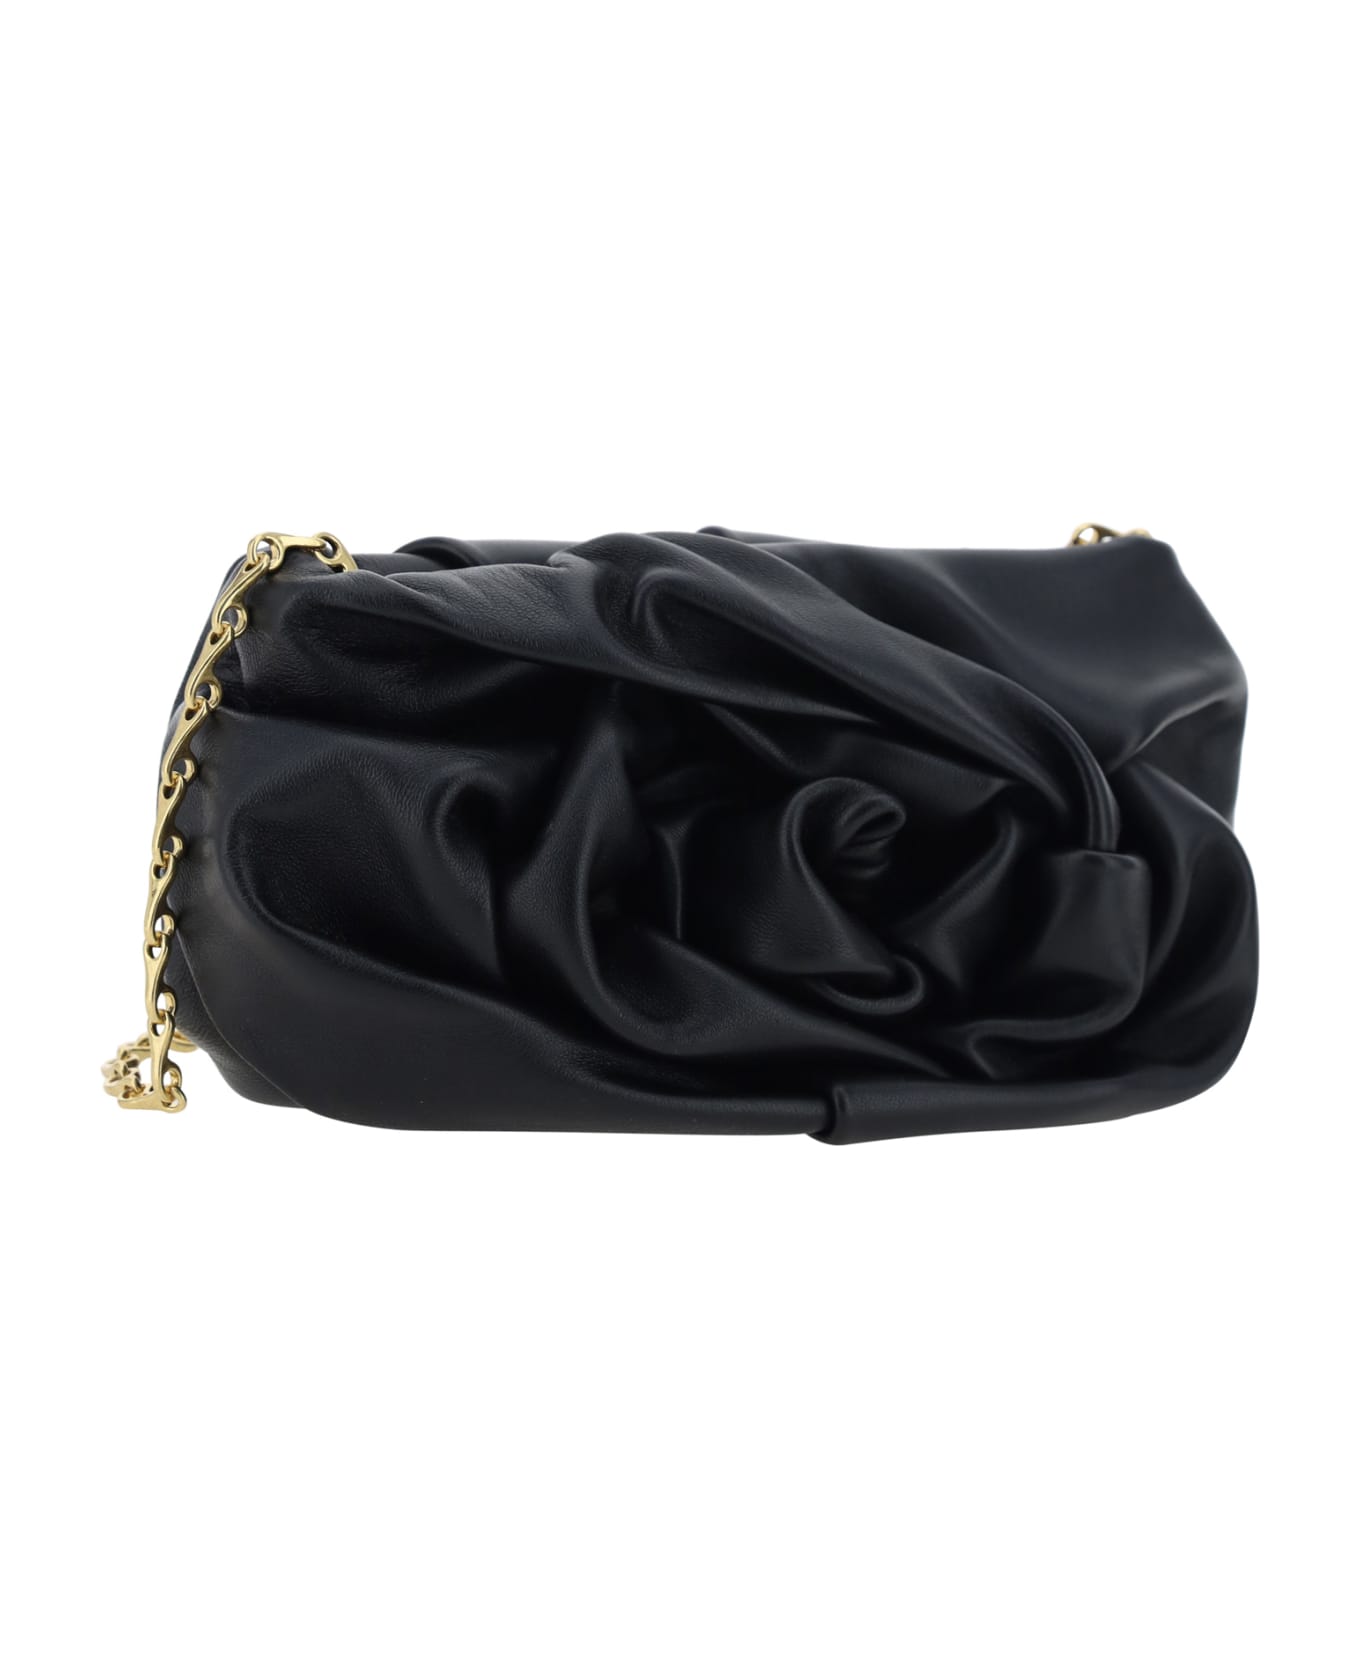 Burberry Rose Clutch Bag - Black